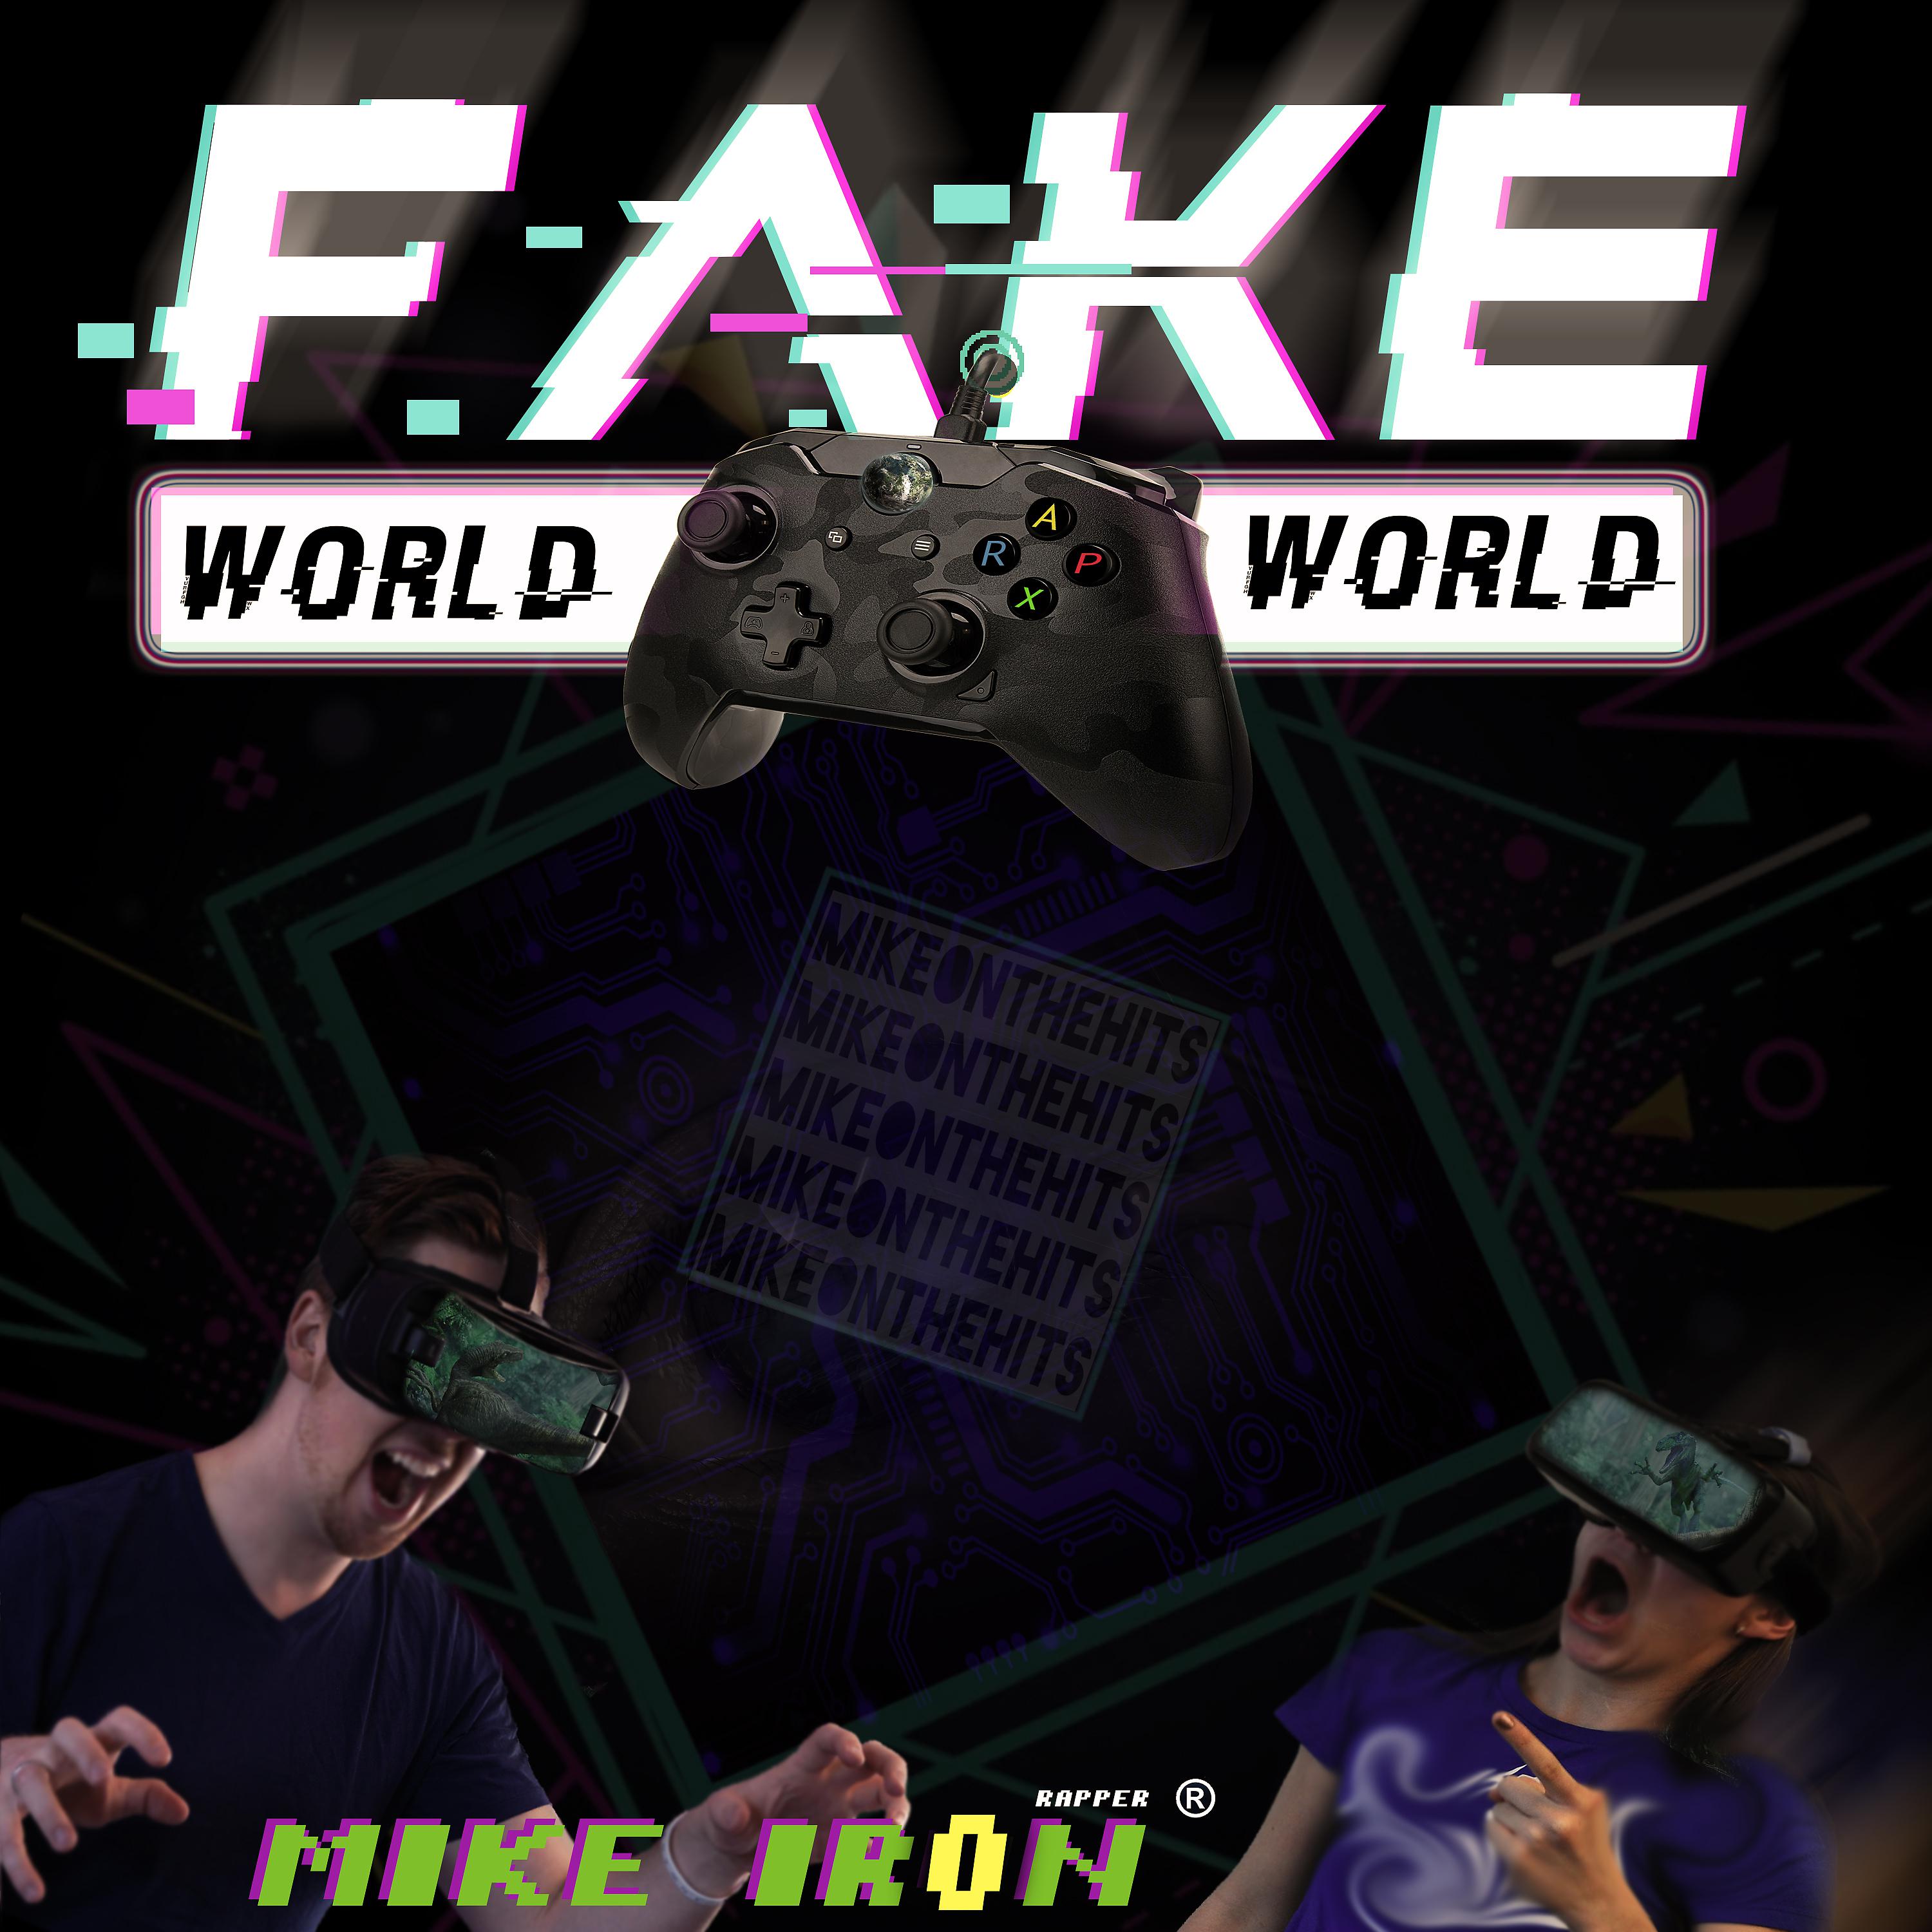 Постер альбома Fake World